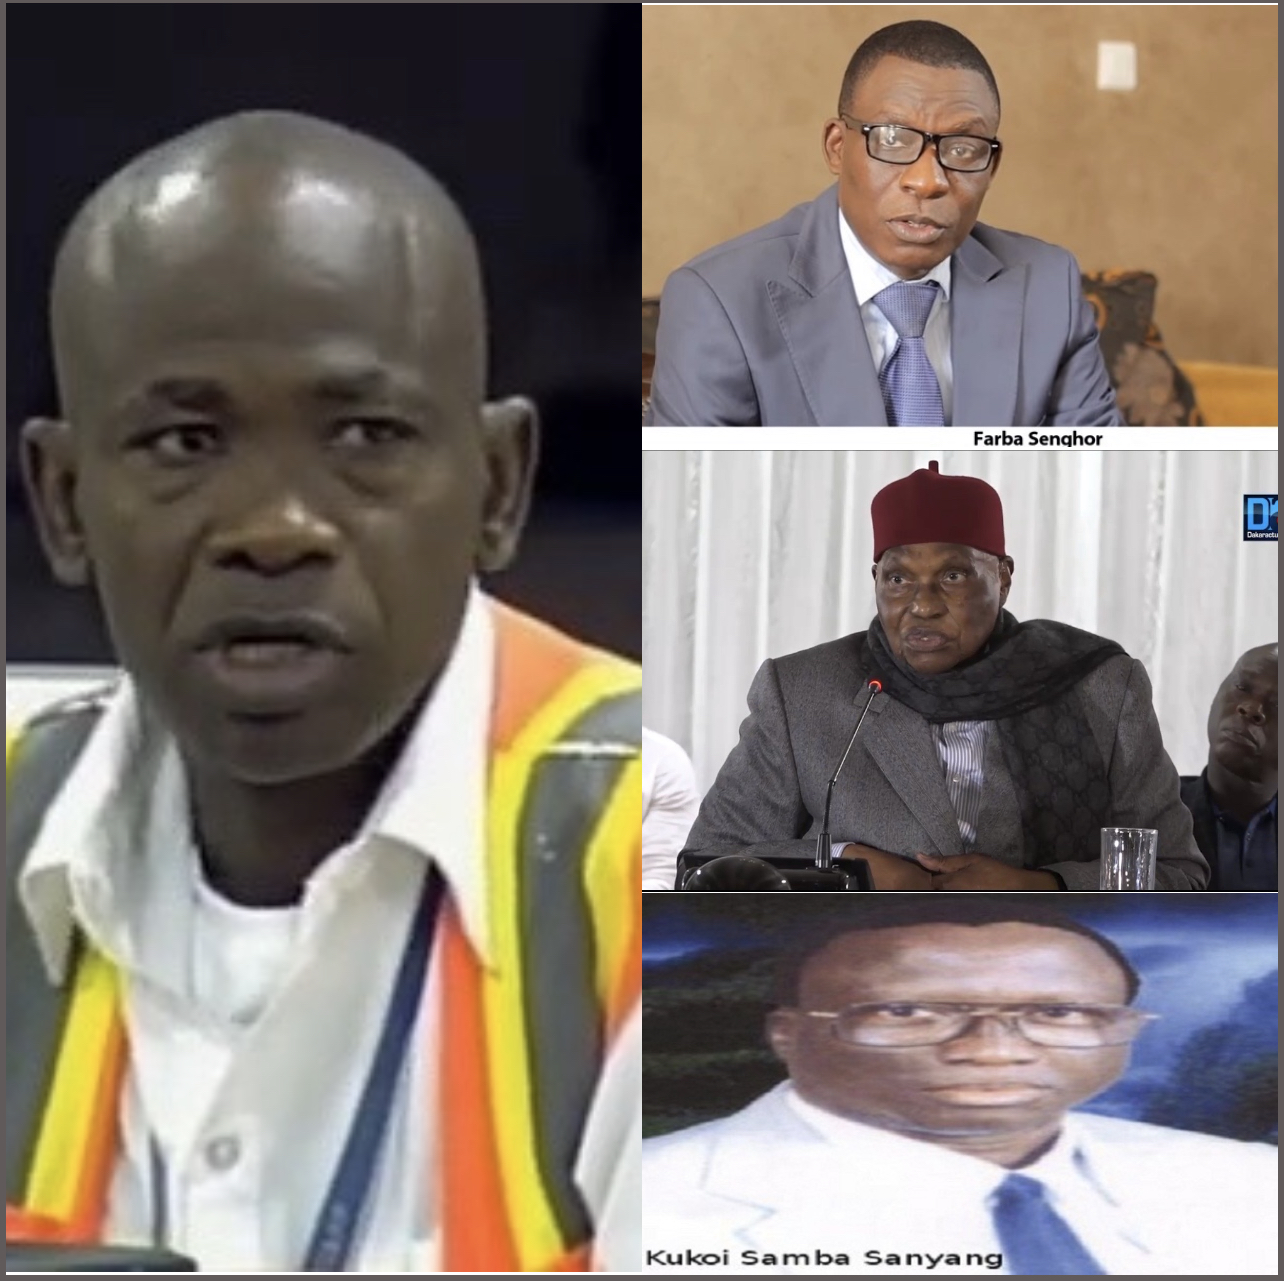 Coup d'État de 1994 en Gambie : Les révélations d'un ancien garde rapproché de Dawda Jawara sur Abdoulaye Wade, Farba Senghor et Kukoï Samba Sagna.